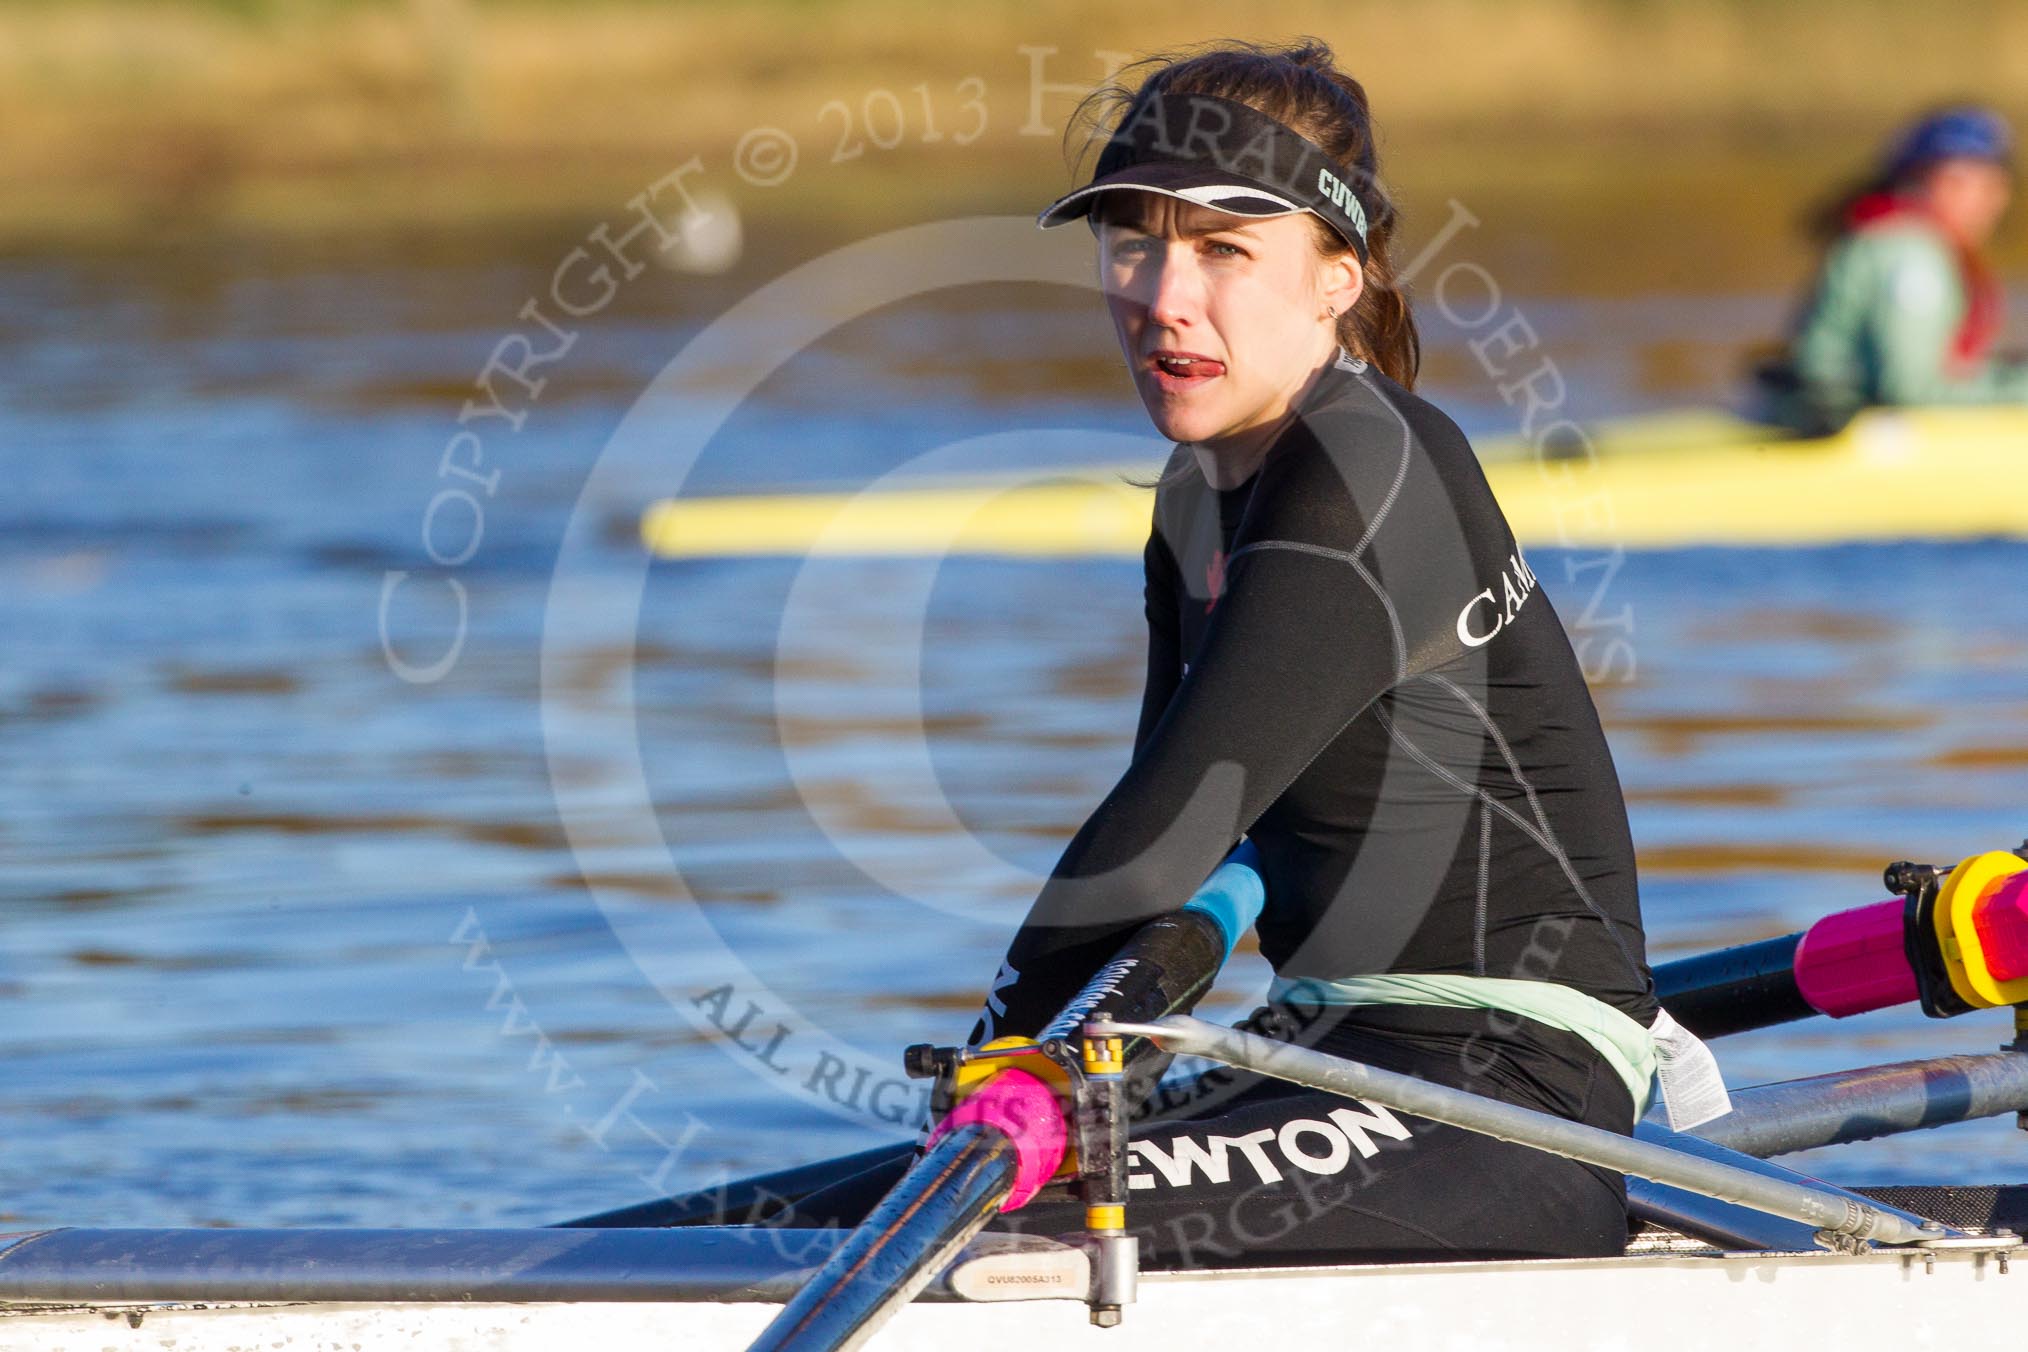 The Boat Race season 2014 - Women's Trial VIIIs(CUWBC, Cambridge): Wink Wink:  5 Caroline Reid..
River Thames between Putney Bridge and Mortlake,
London SW15,

United Kingdom,
on 19 December 2013 at 13:47, image #263